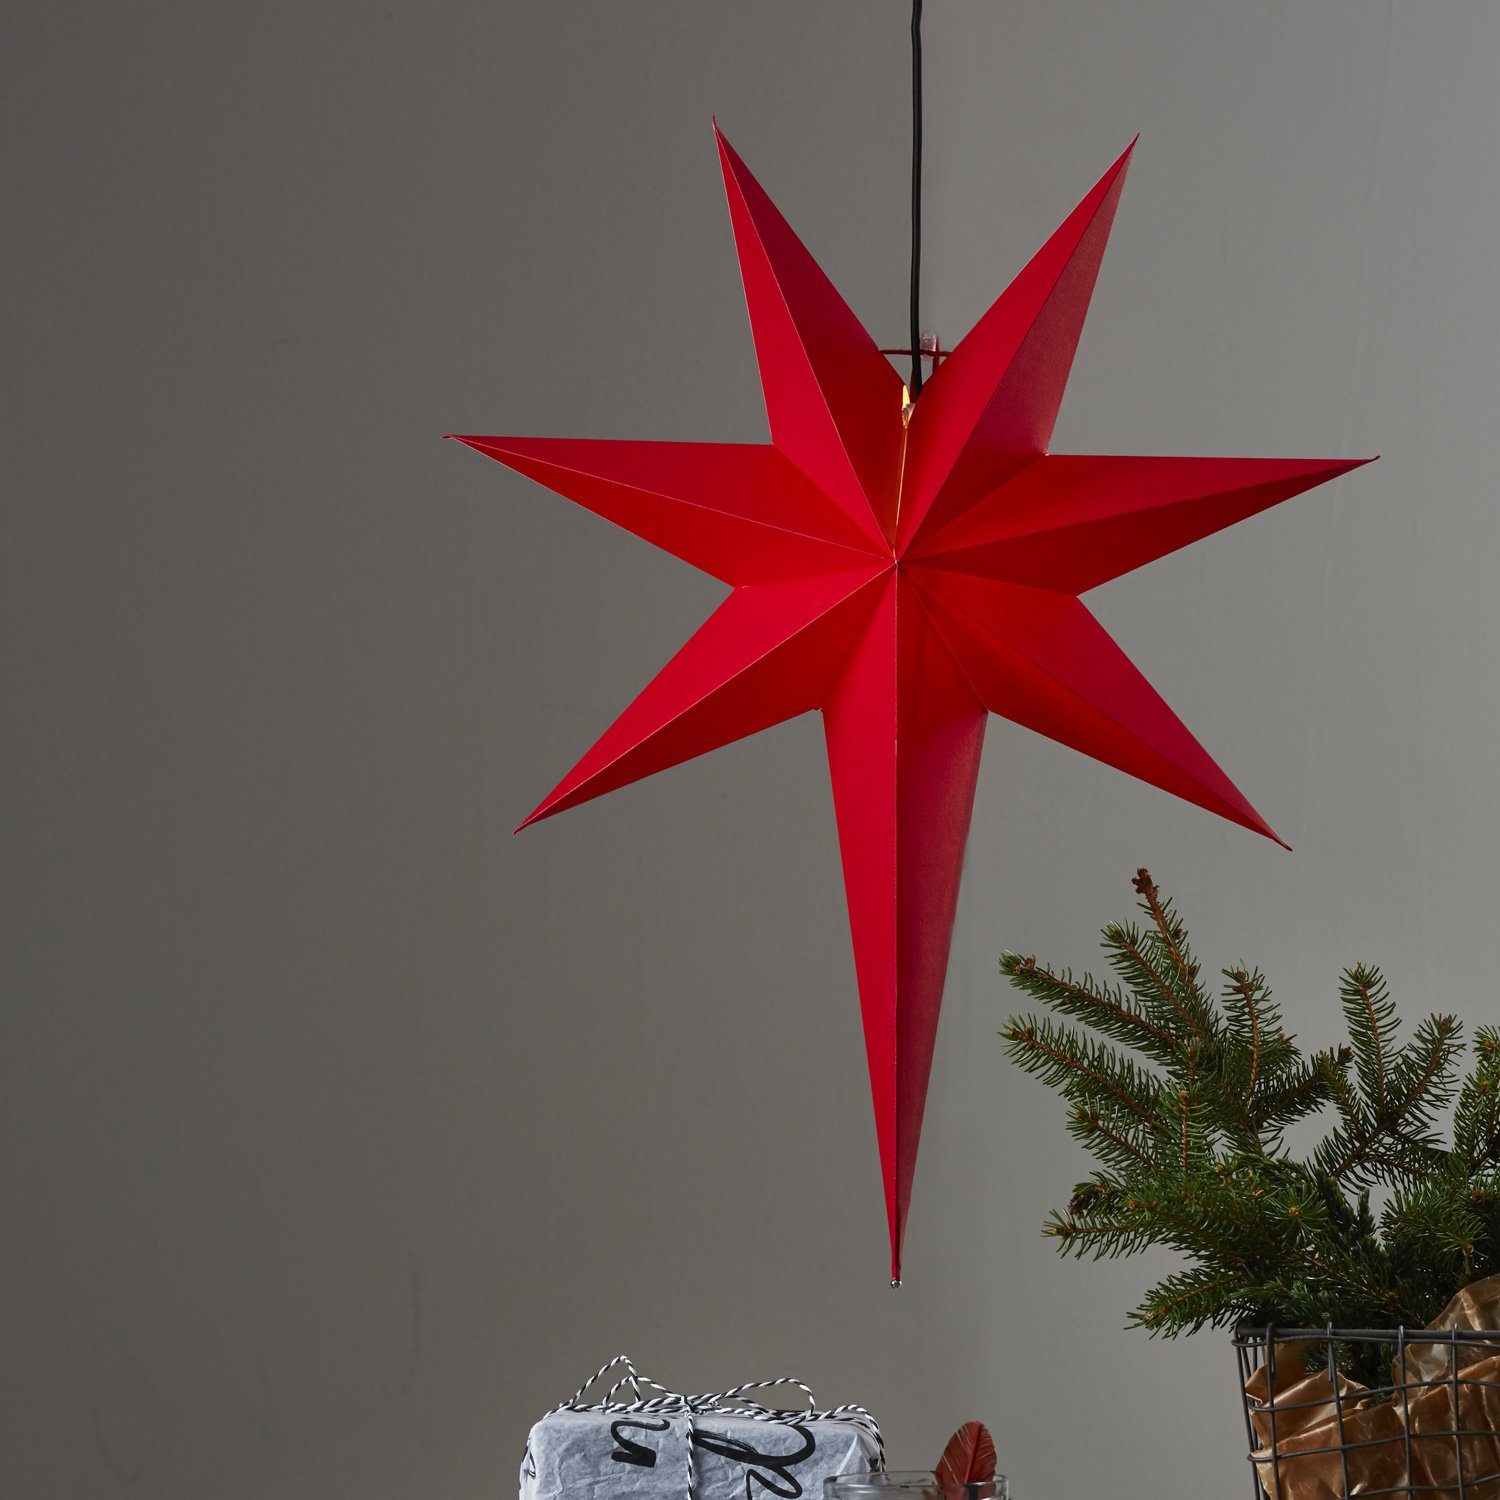 rot Papierstern STAR LED 7-zackig Faltstern 55cm mit hängend TRADING Stern Kabel Leuchtstern